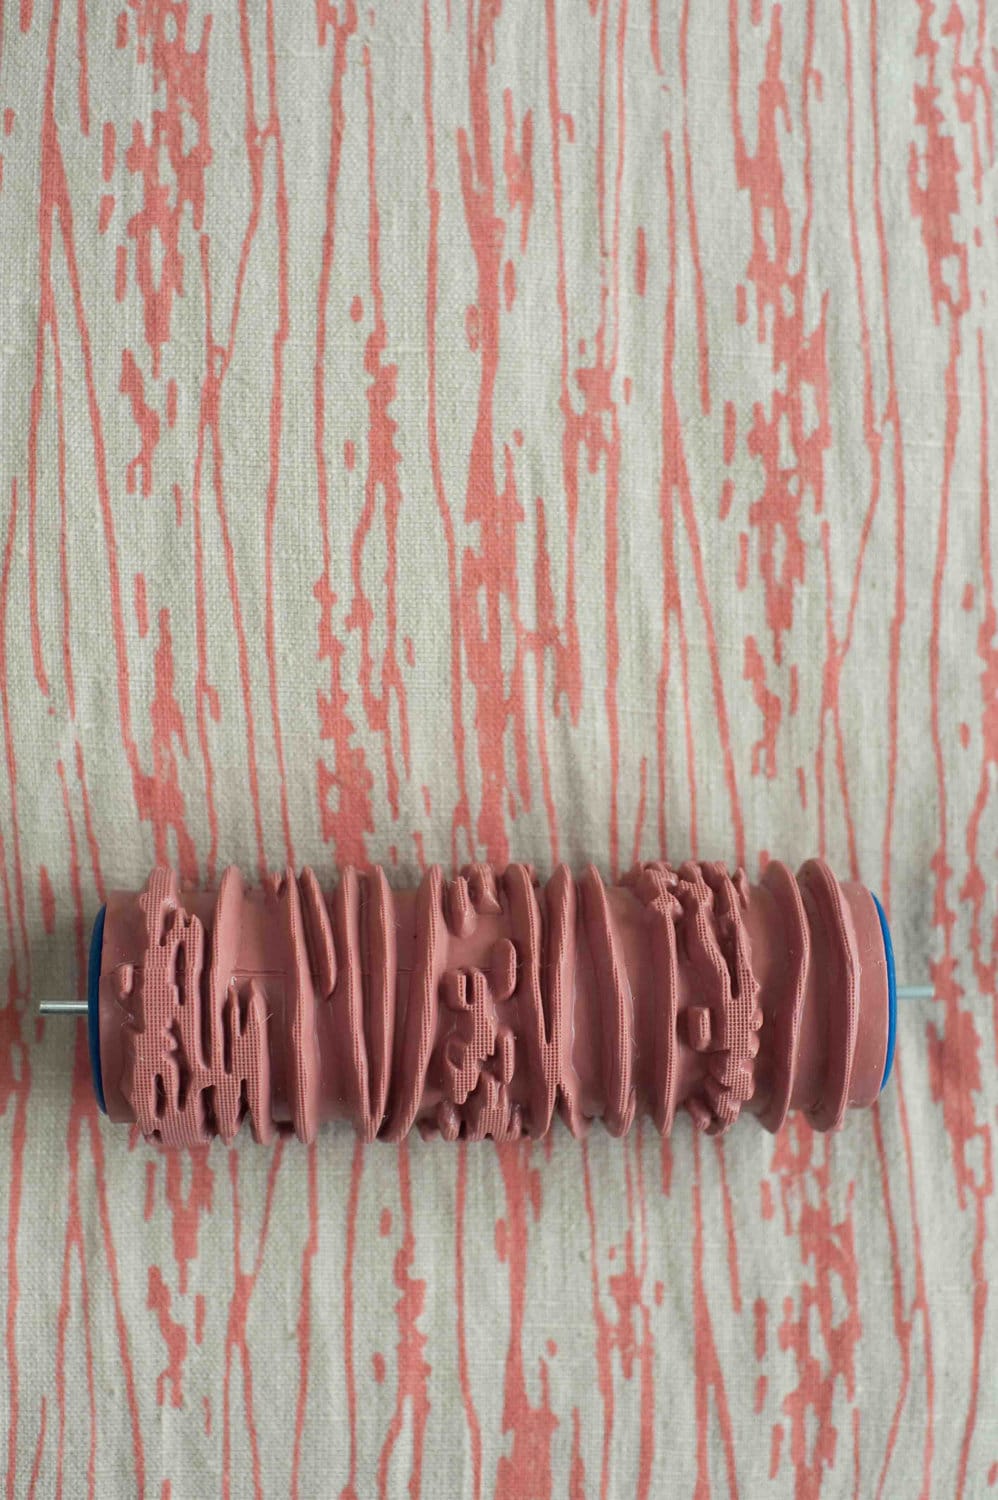 paint-roller-looks-like-wallpaper